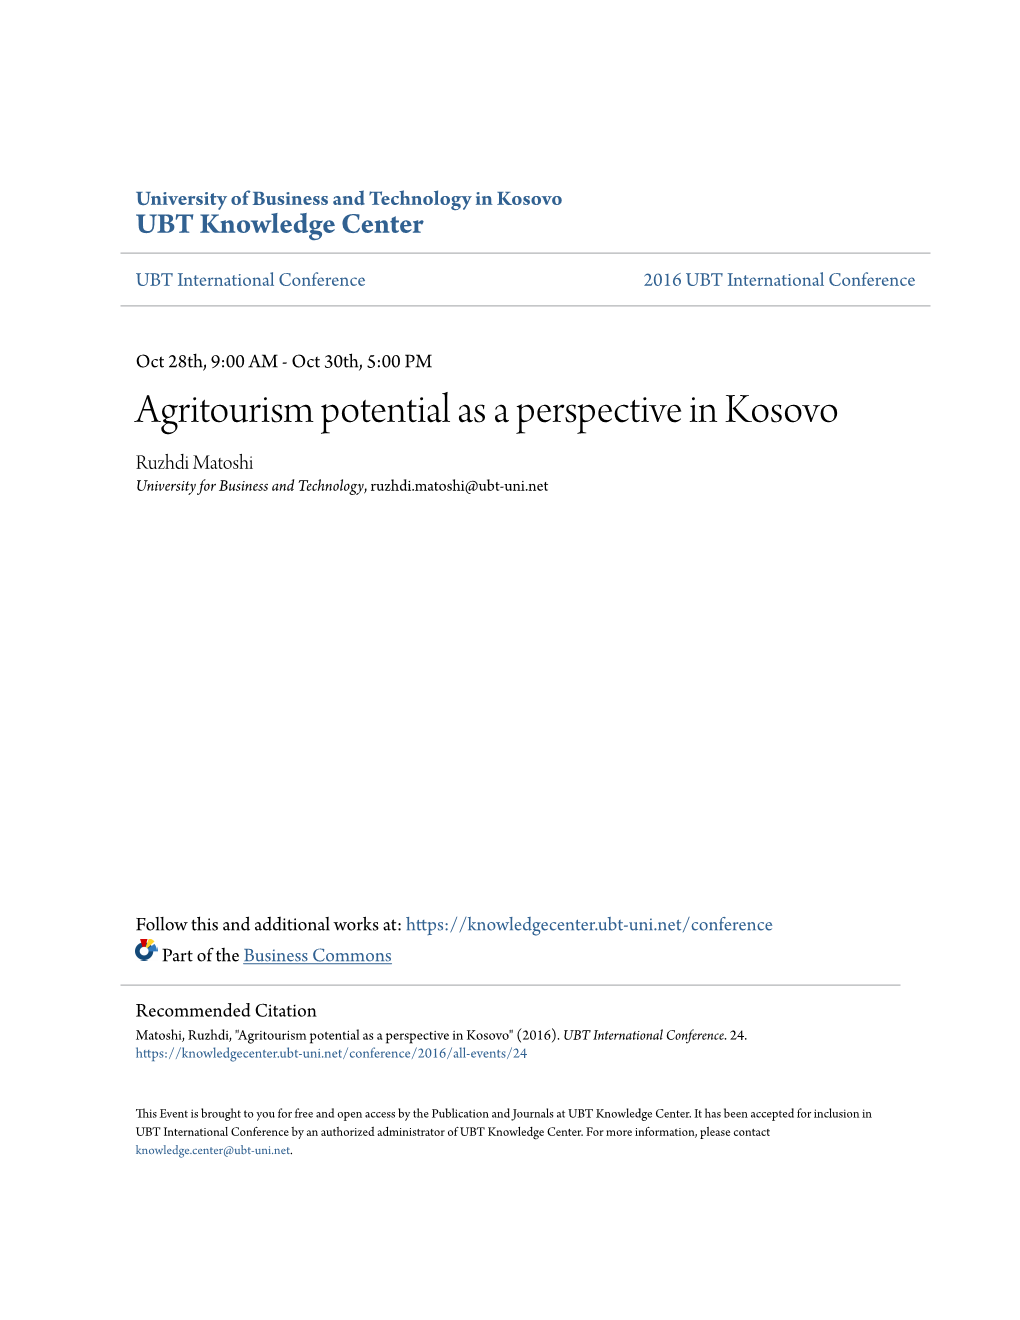 Agritourism Potential As a Perspective in Kosovo Ruzhdi Matoshi University for Business and Technology, Ruzhdi.Matoshi@Ubt-Uni.Net